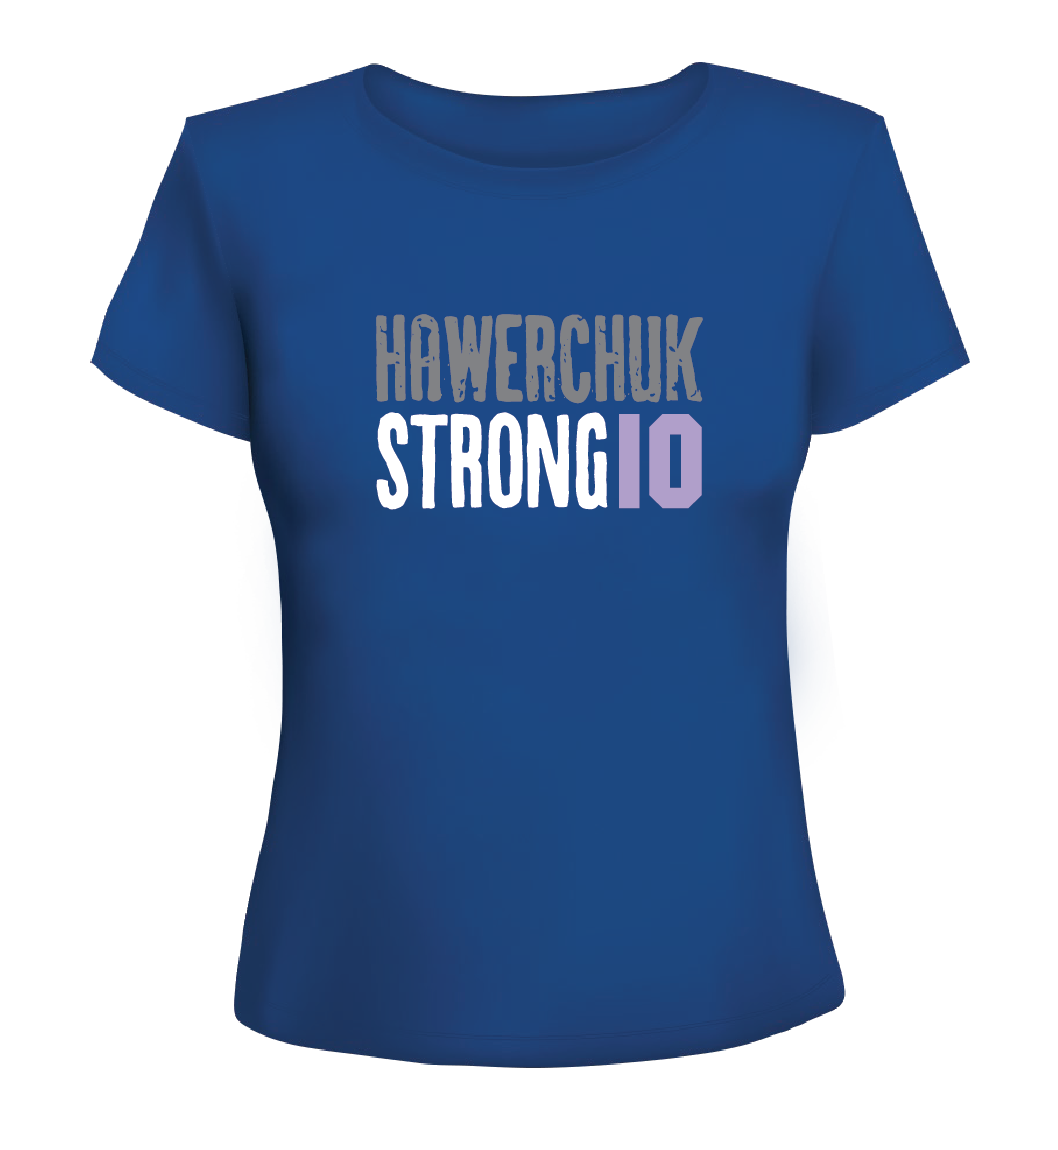 Women's Short Sleeve T-Shirt [Blue, Black, Grey] – Hawerchuk Strong 10